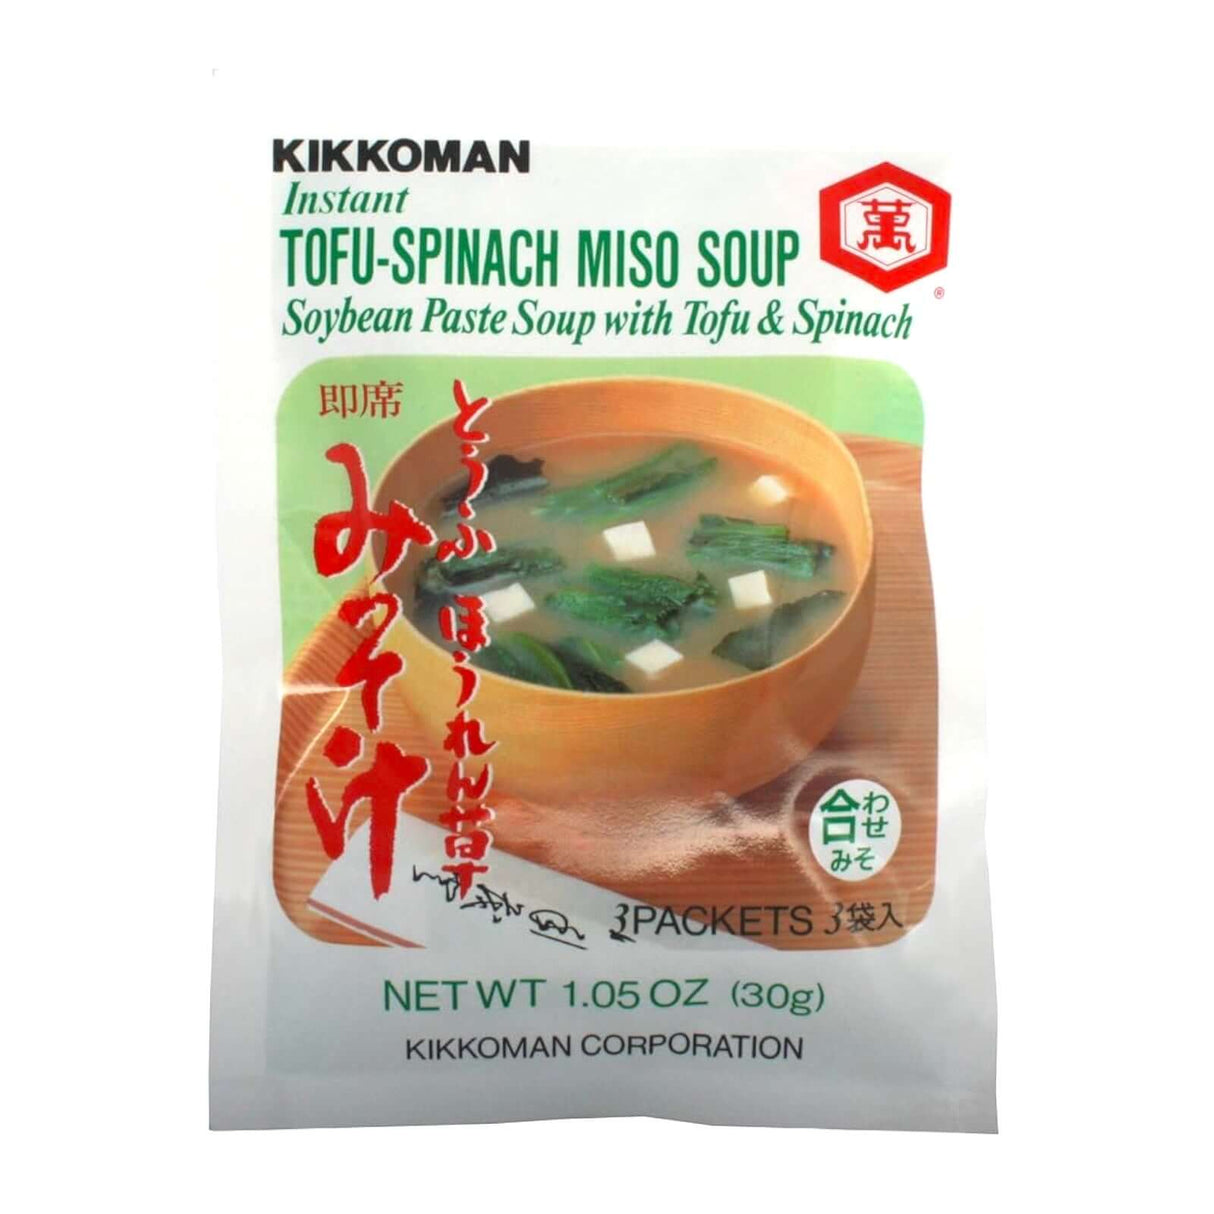 Kikkoman Instant Tofu-Spinach Miso Soup